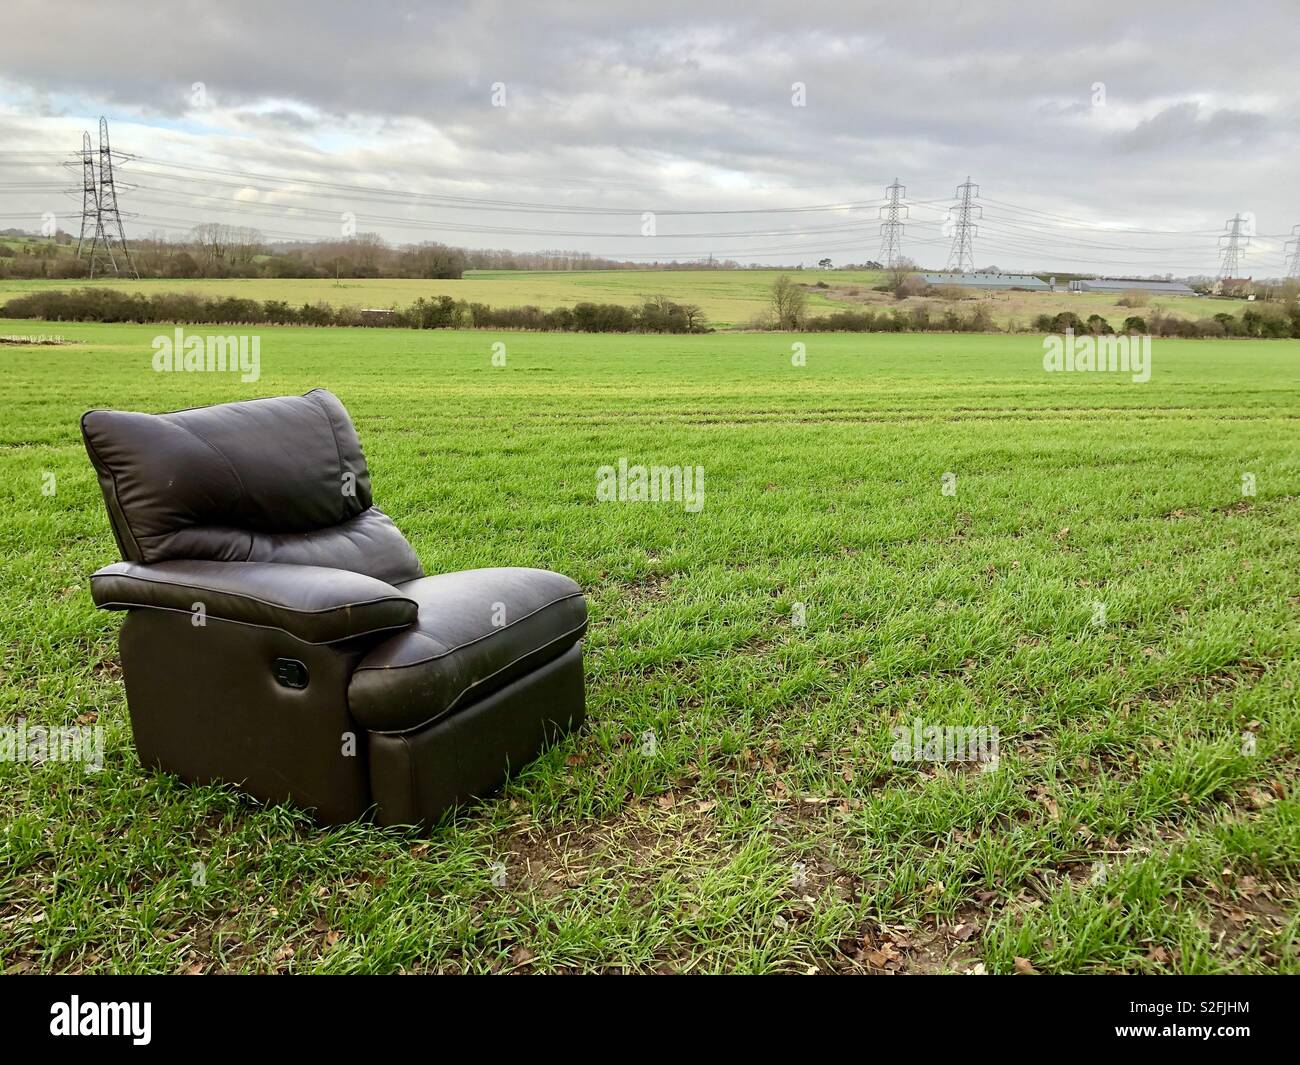 An armchair dumped in a field Stock Photo